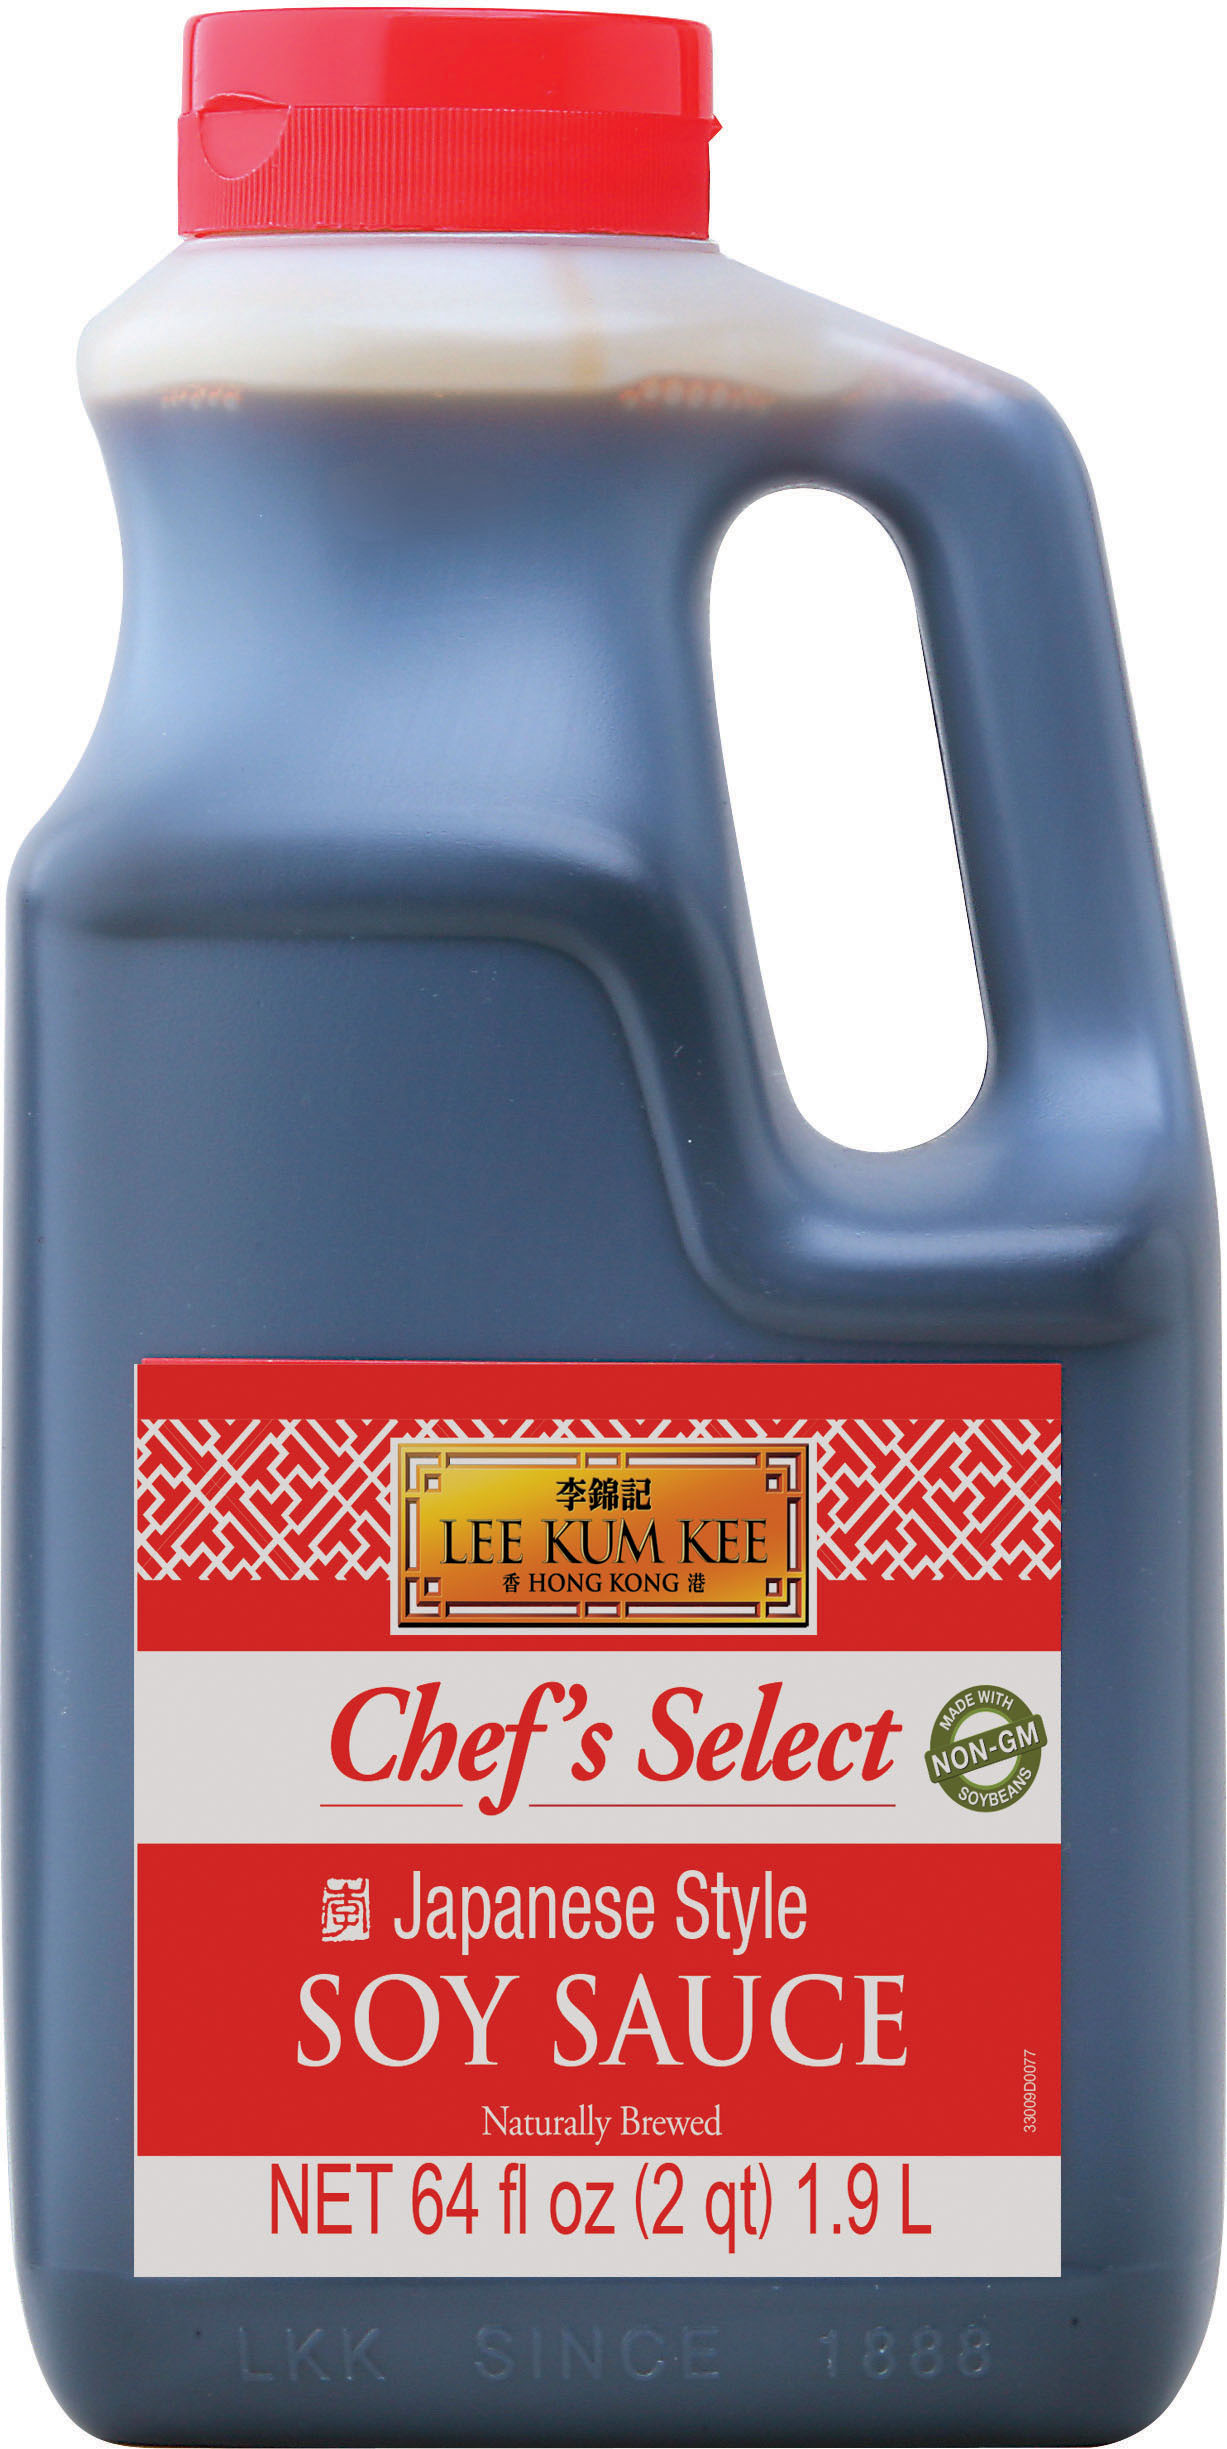 Chefs Select Soy Sauce, 64 fl oz, 1.9L